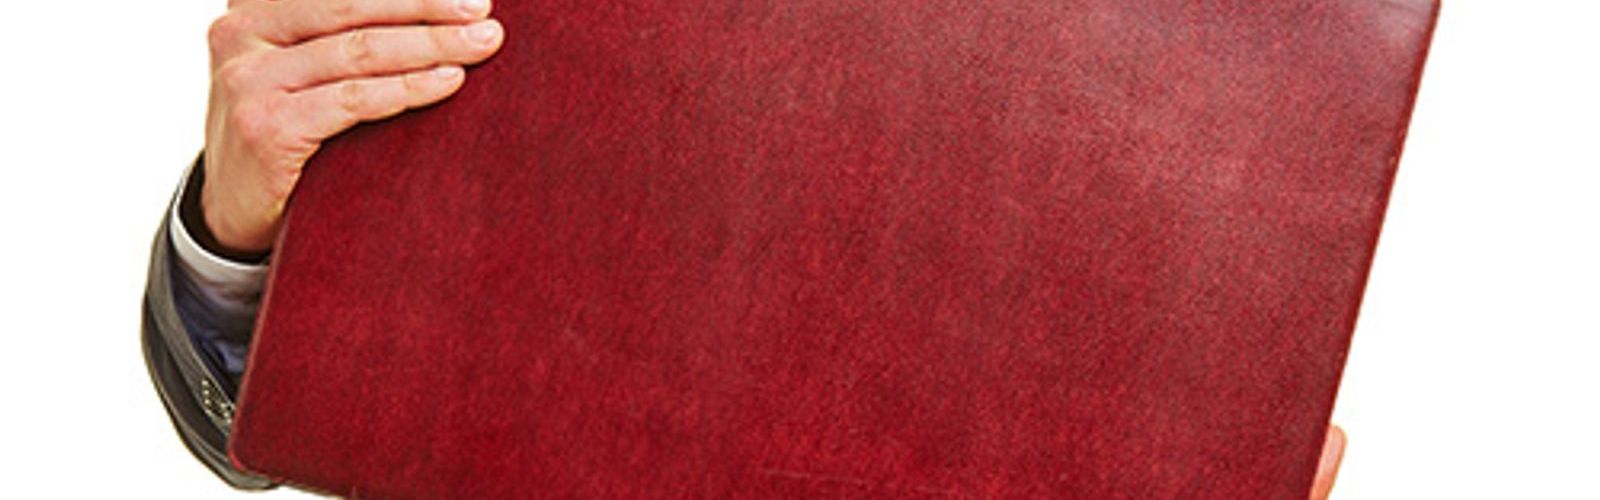 red briefcase - uk budget - statement (bigstock 109455590)_web_small_NOL.jpg